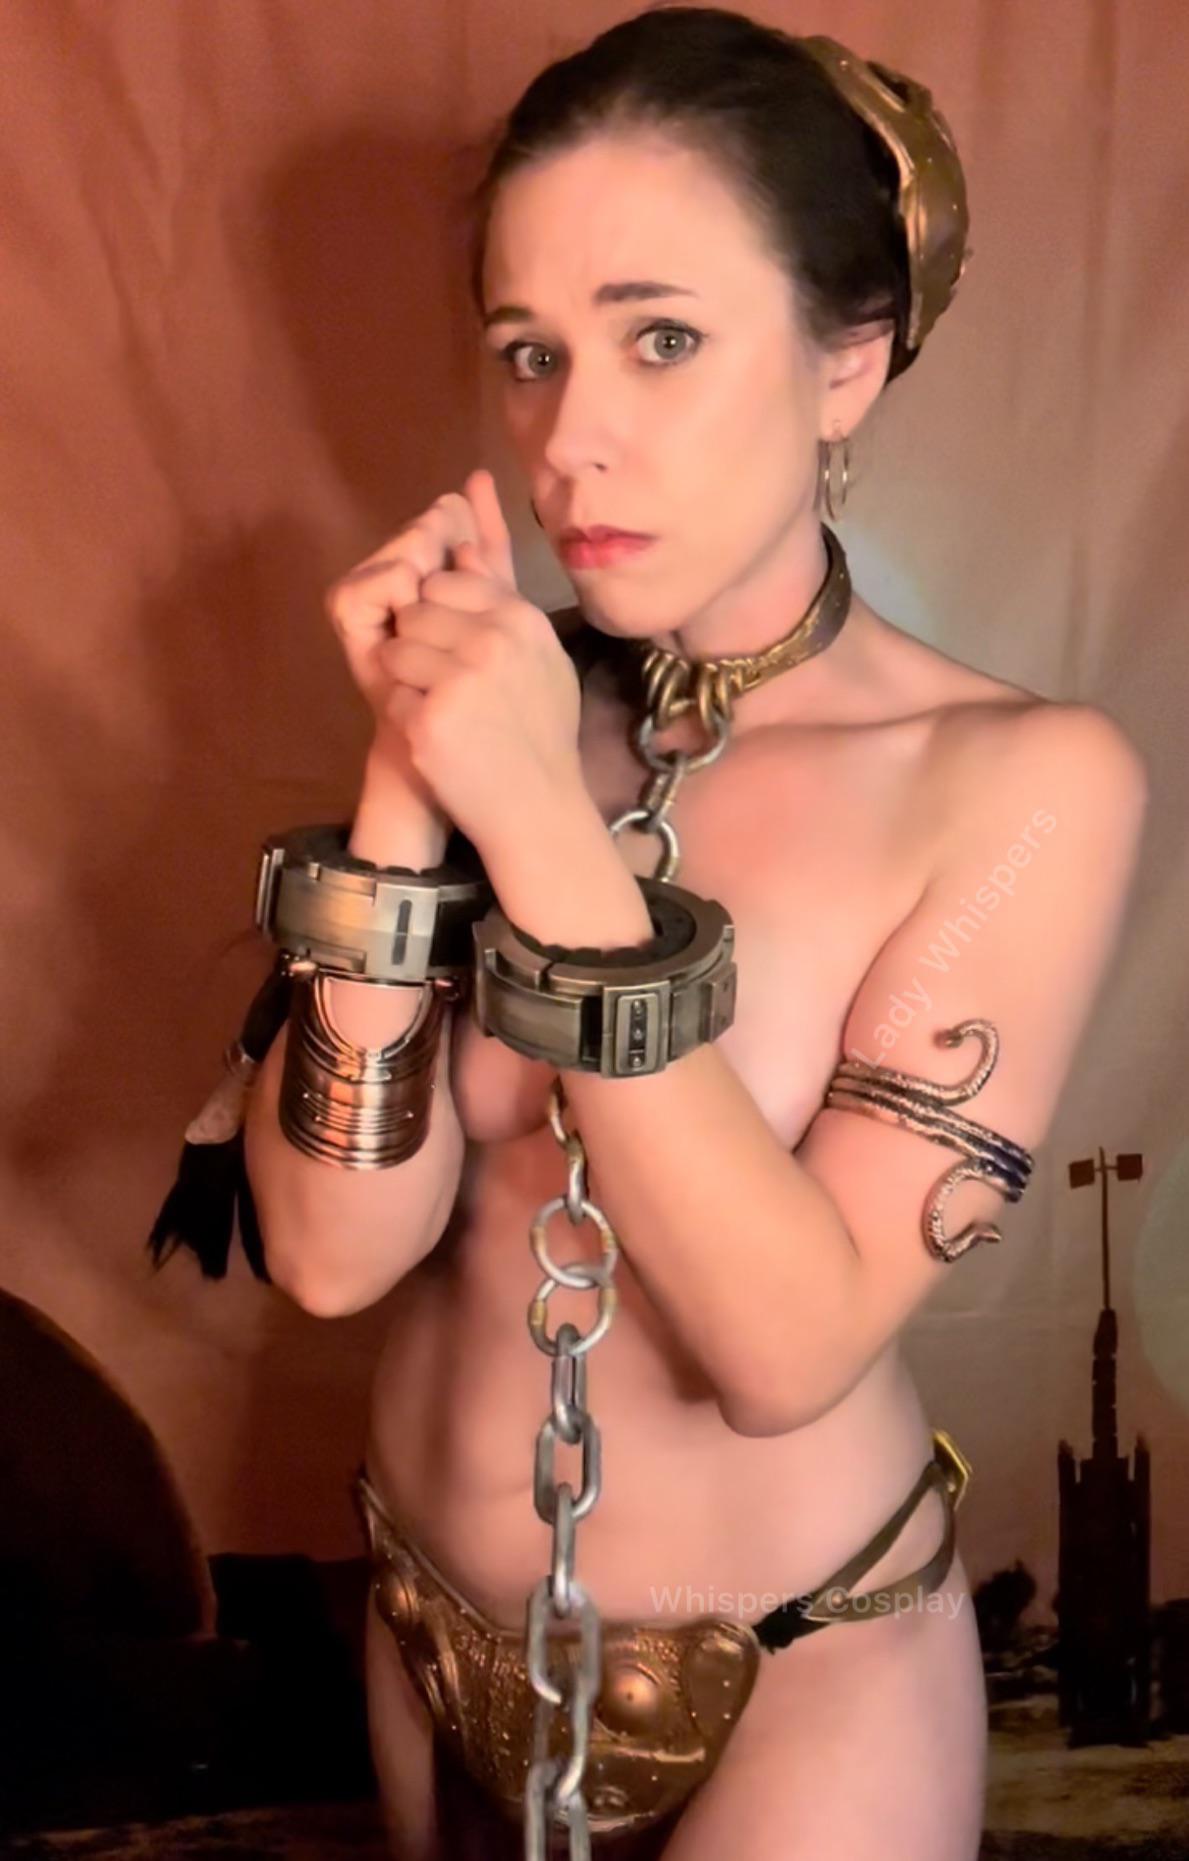 Twin Star Wars Slave Porn - Slave Leia in Tatooine got a new set of Star Wars cuffs.